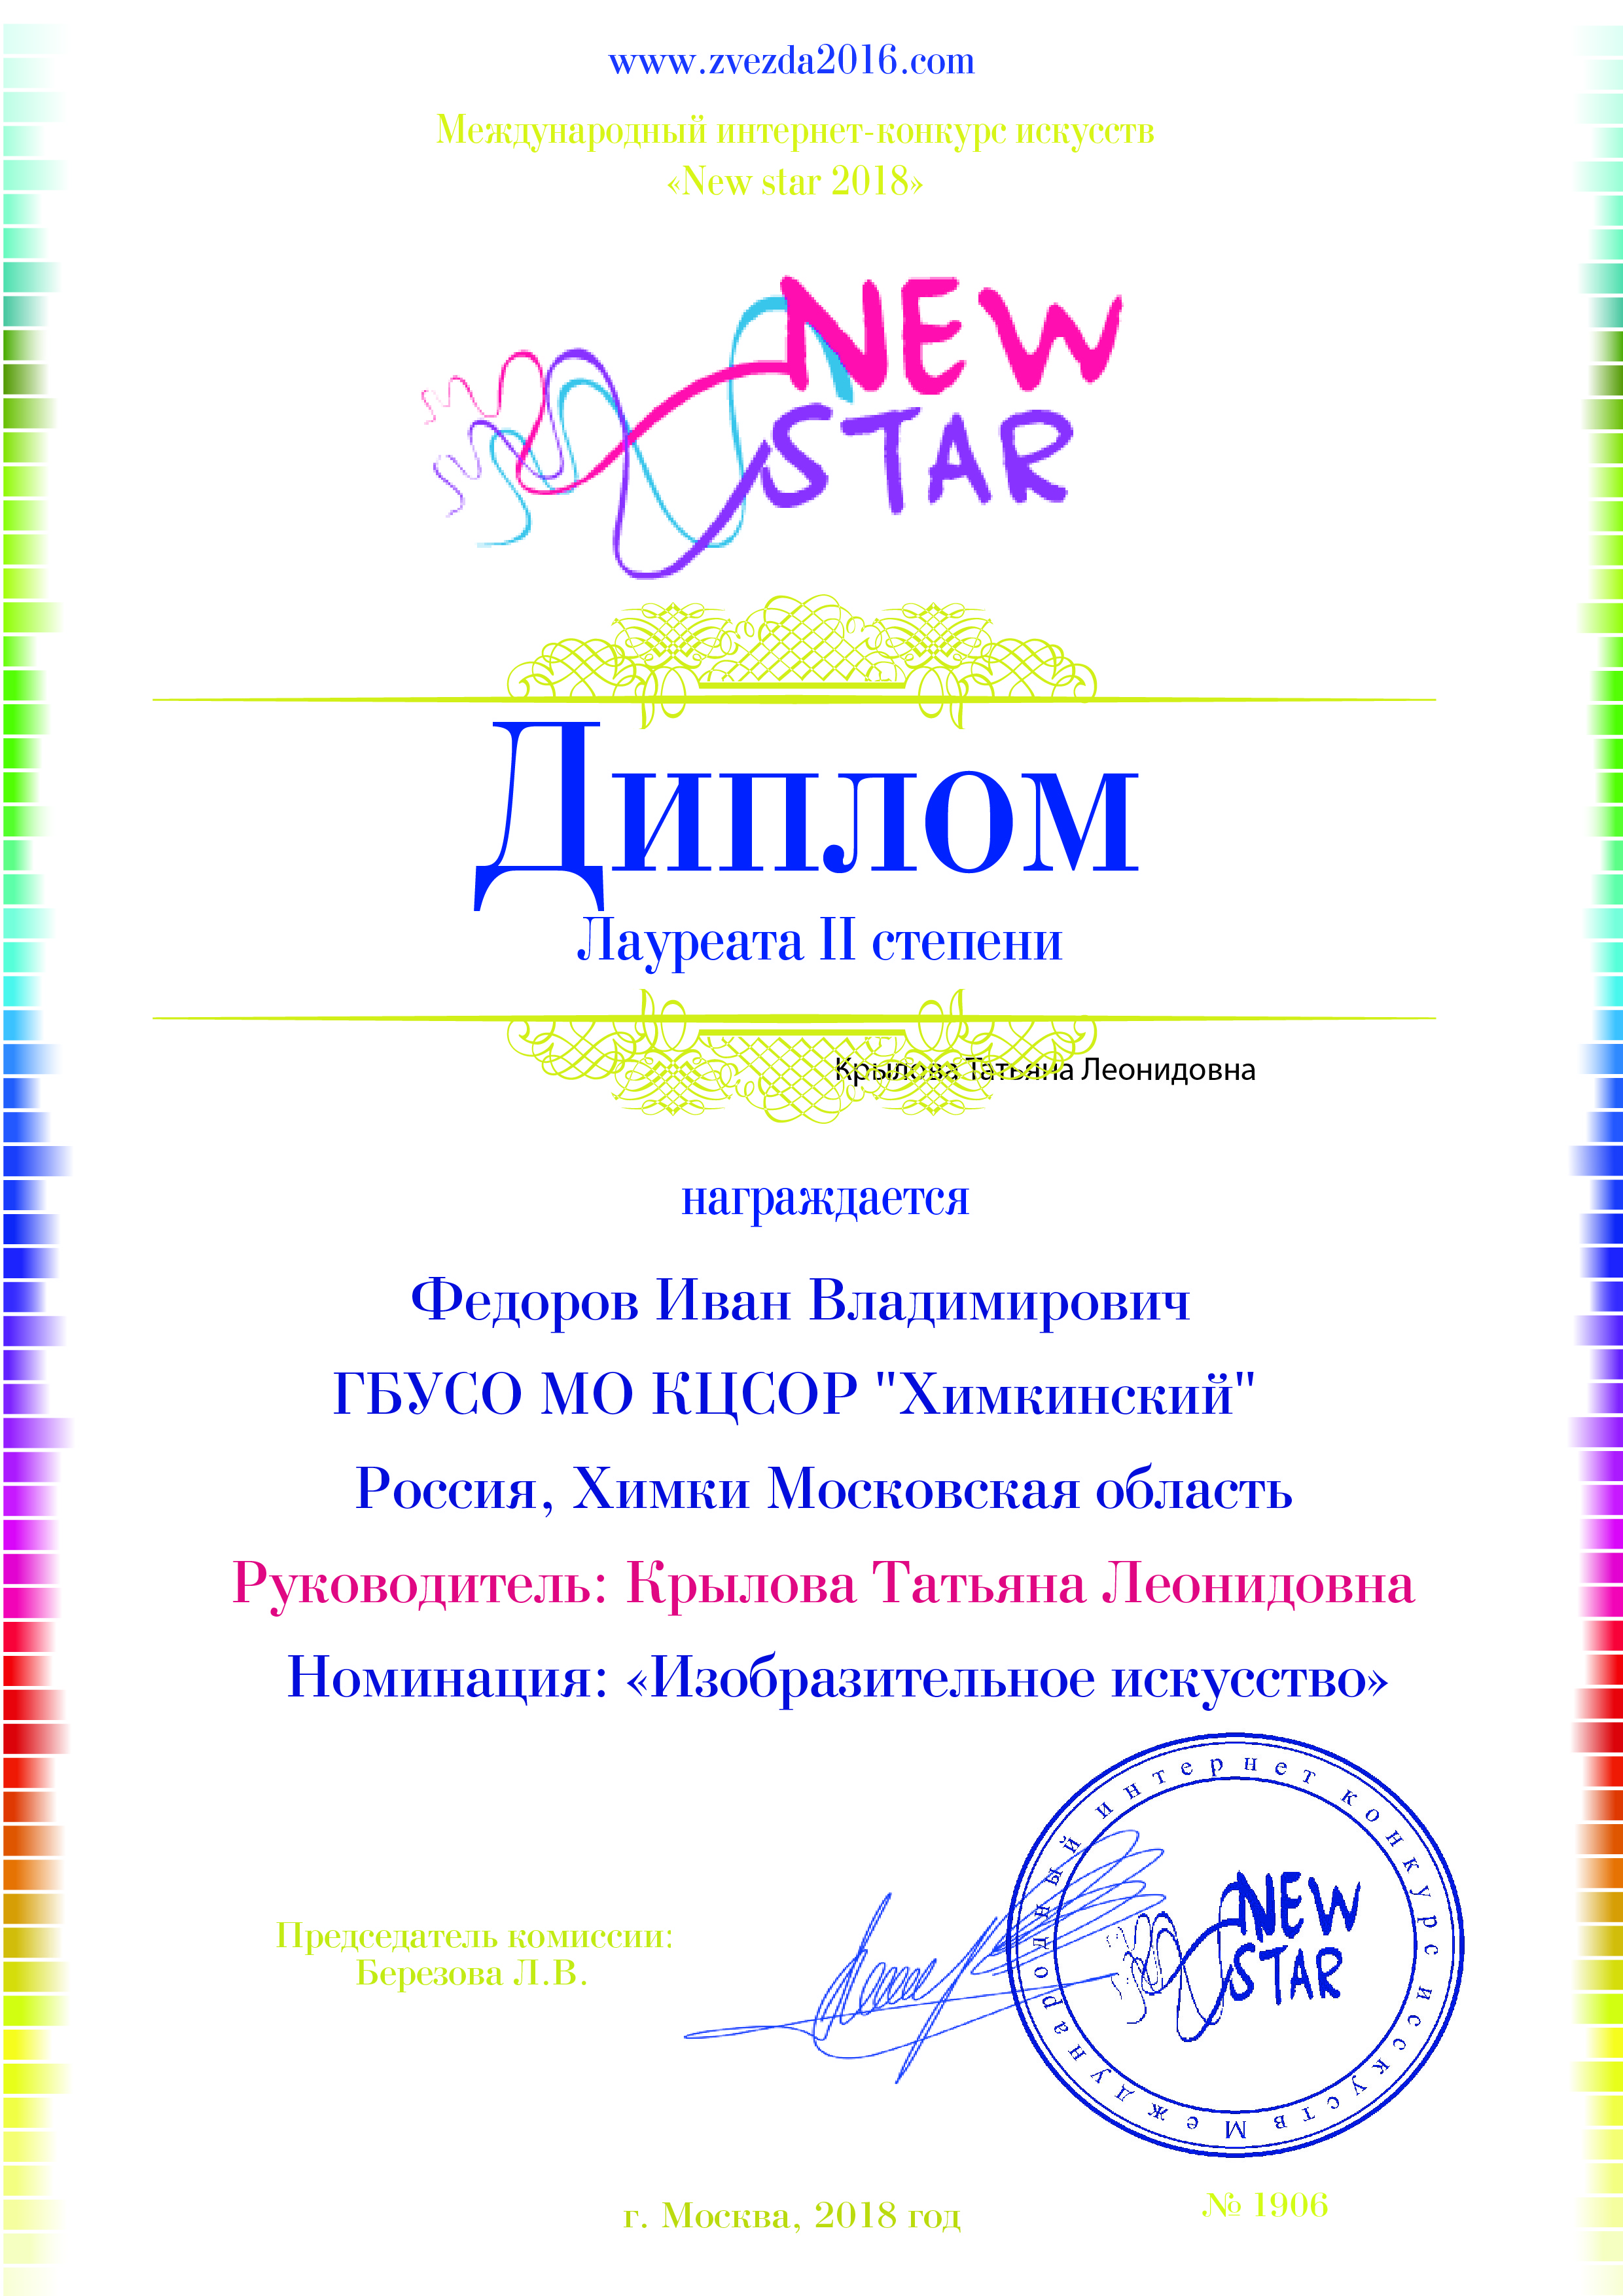 Диплом Лауреата II степени Международного интернет-конкурса искусств "New star 2018"